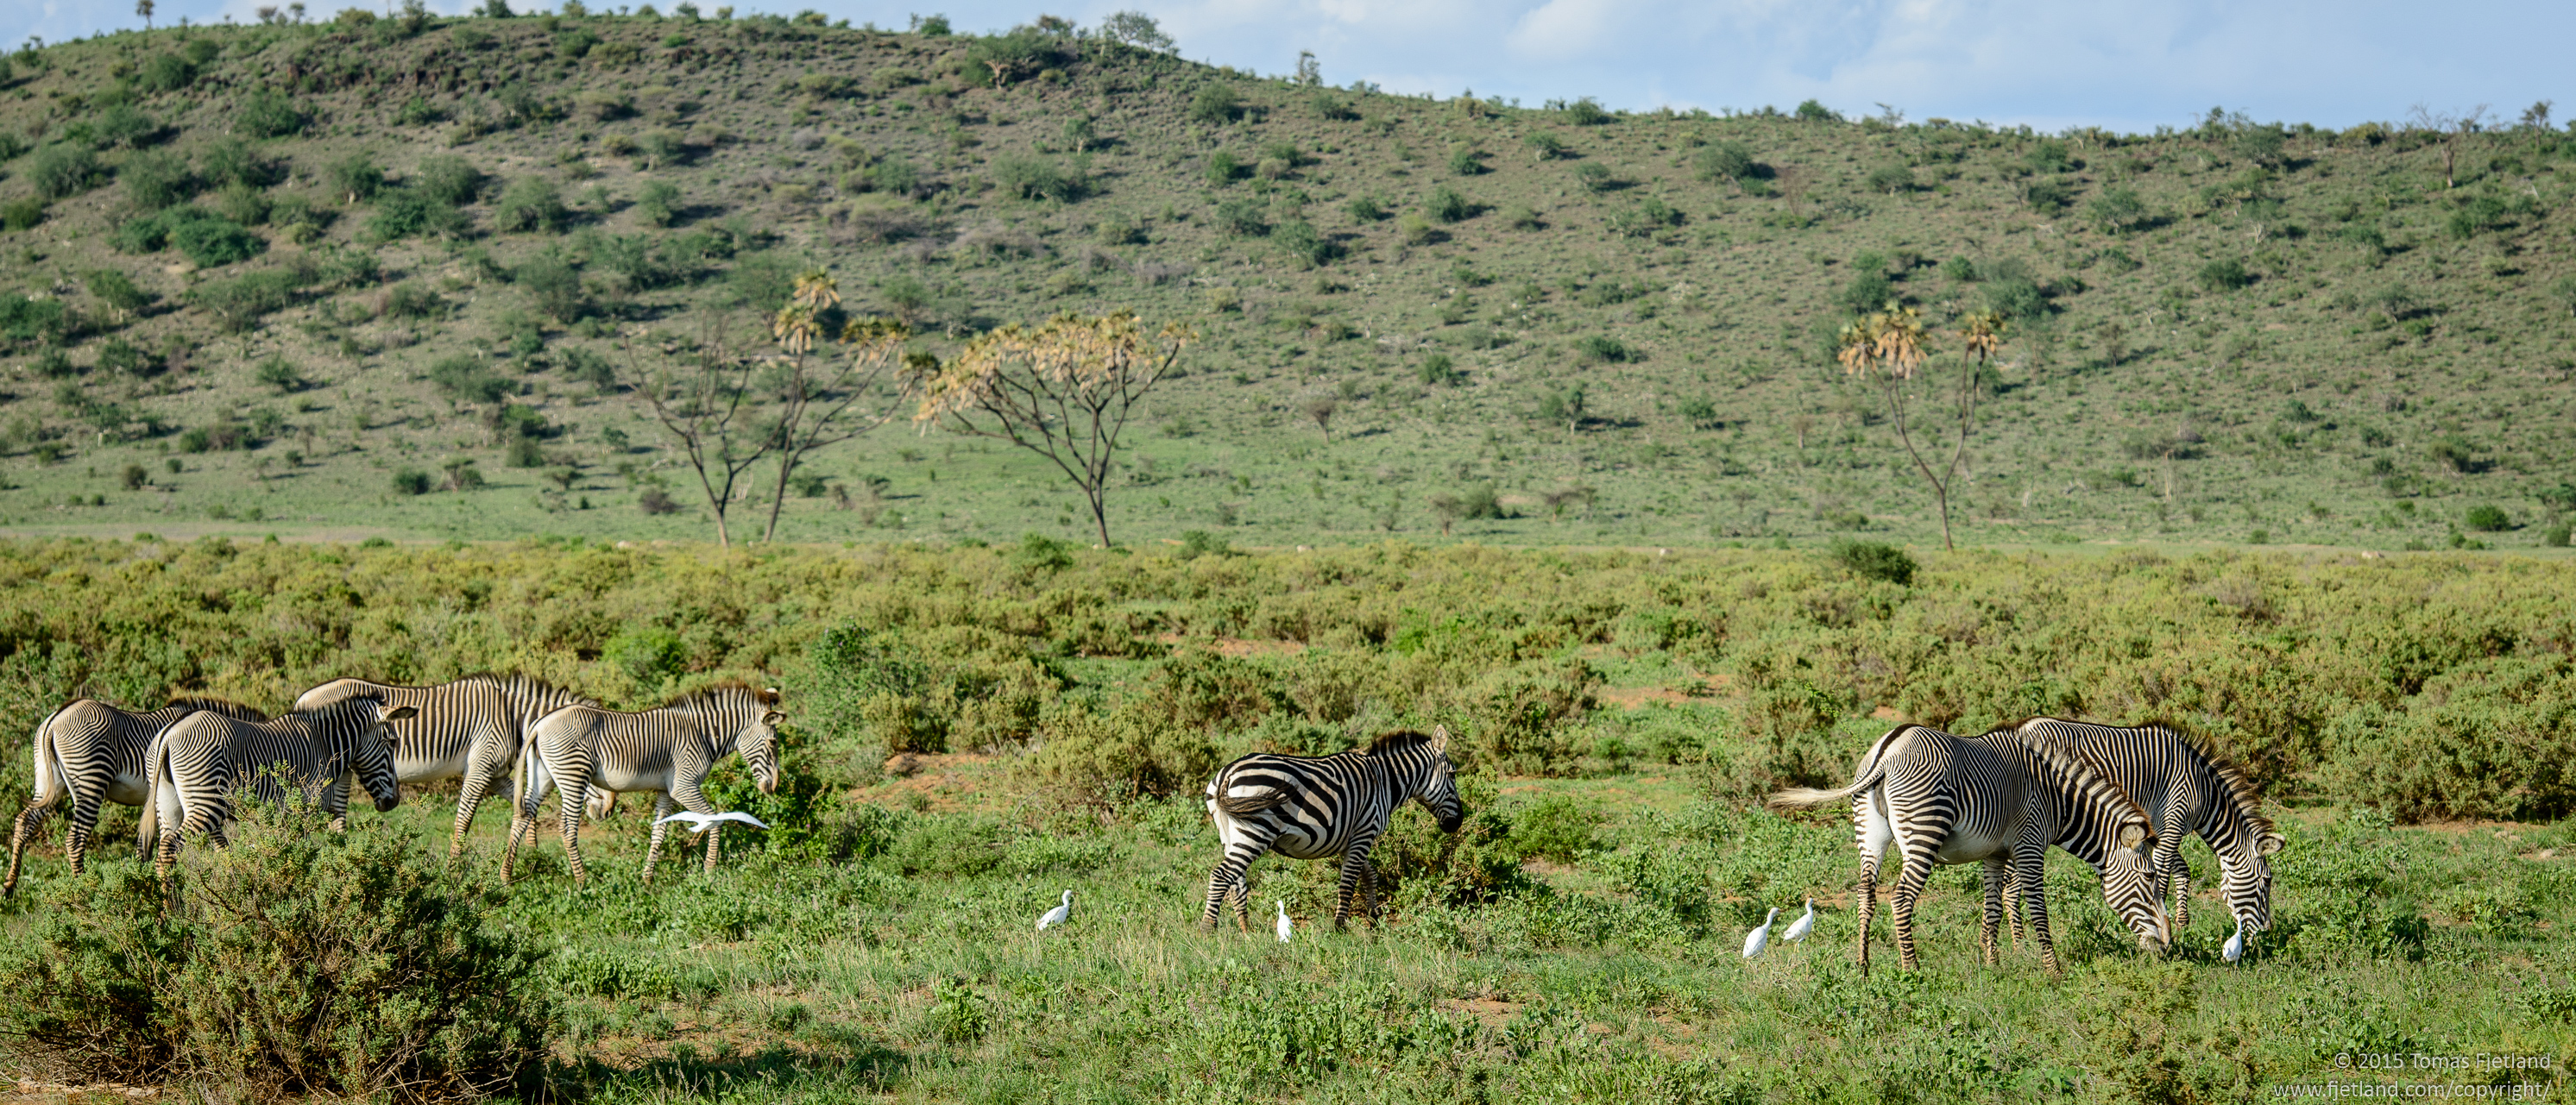 Samburu is normally home to herds of Grévys Zebras, a distinct subspecies of Zebras. Here a lone "Mara" Zebra has joined them.